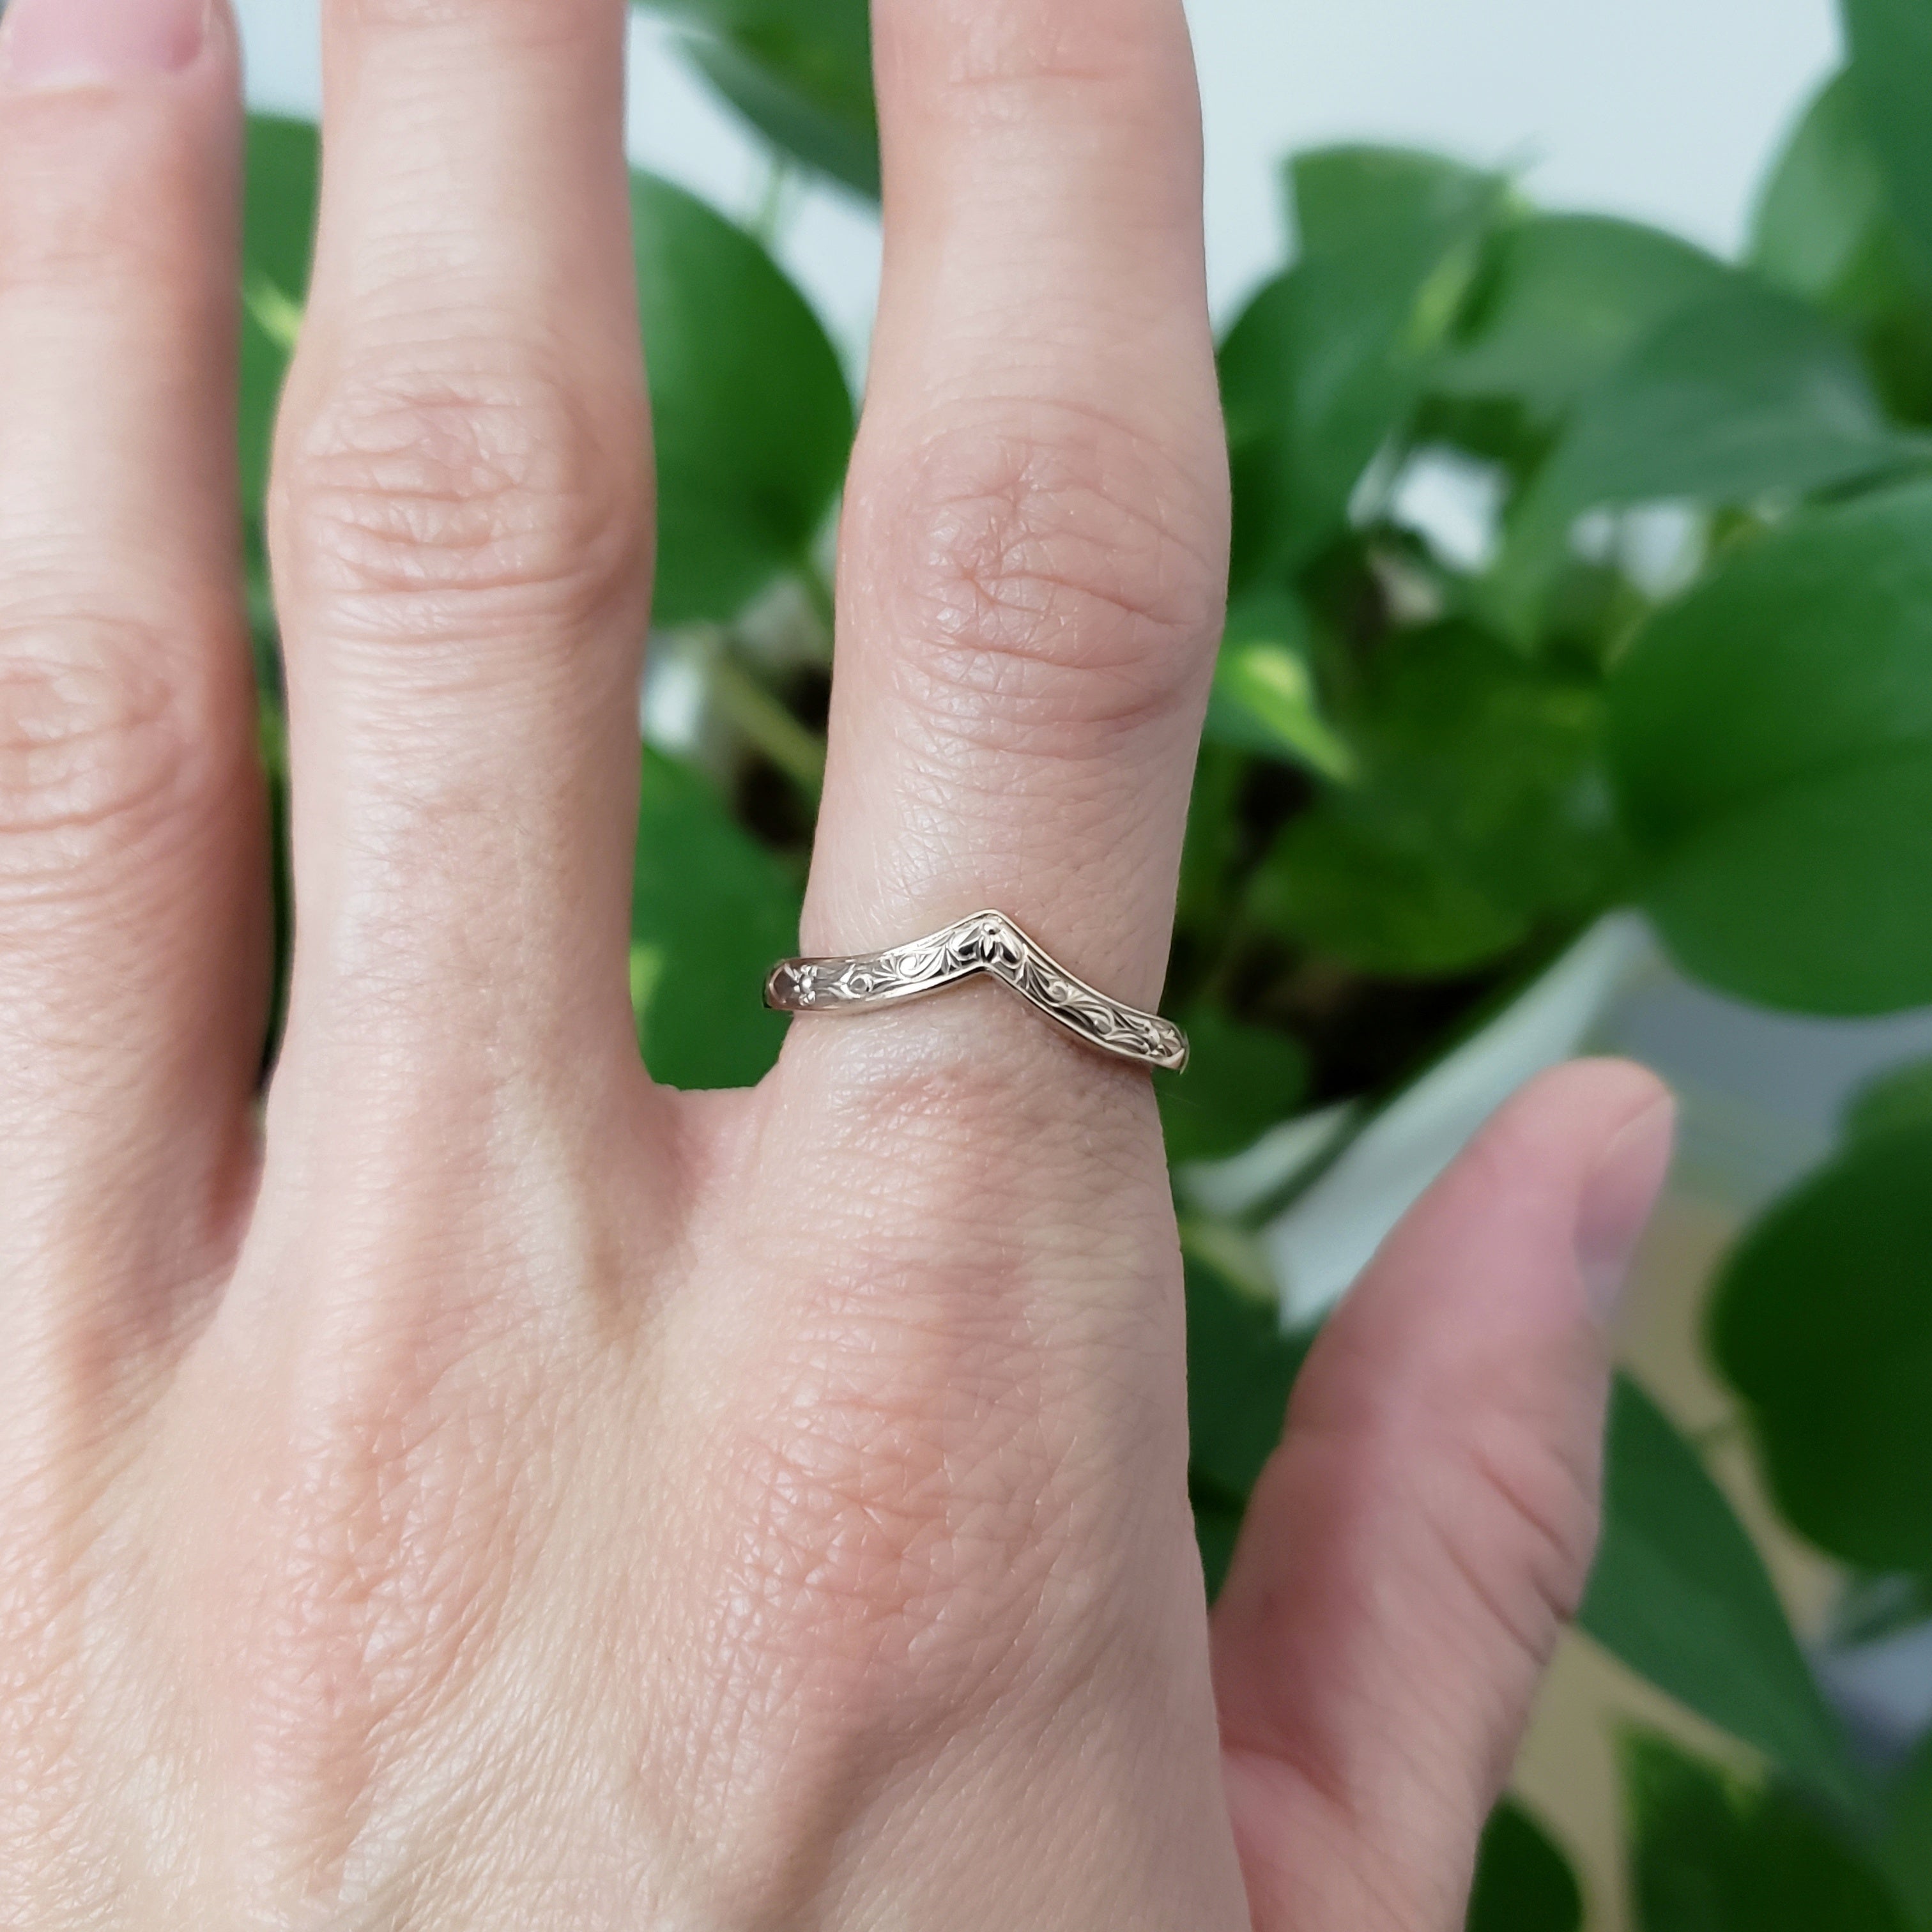 White Gold Engraved Wedding Ring | Era Design Vancouver Canada